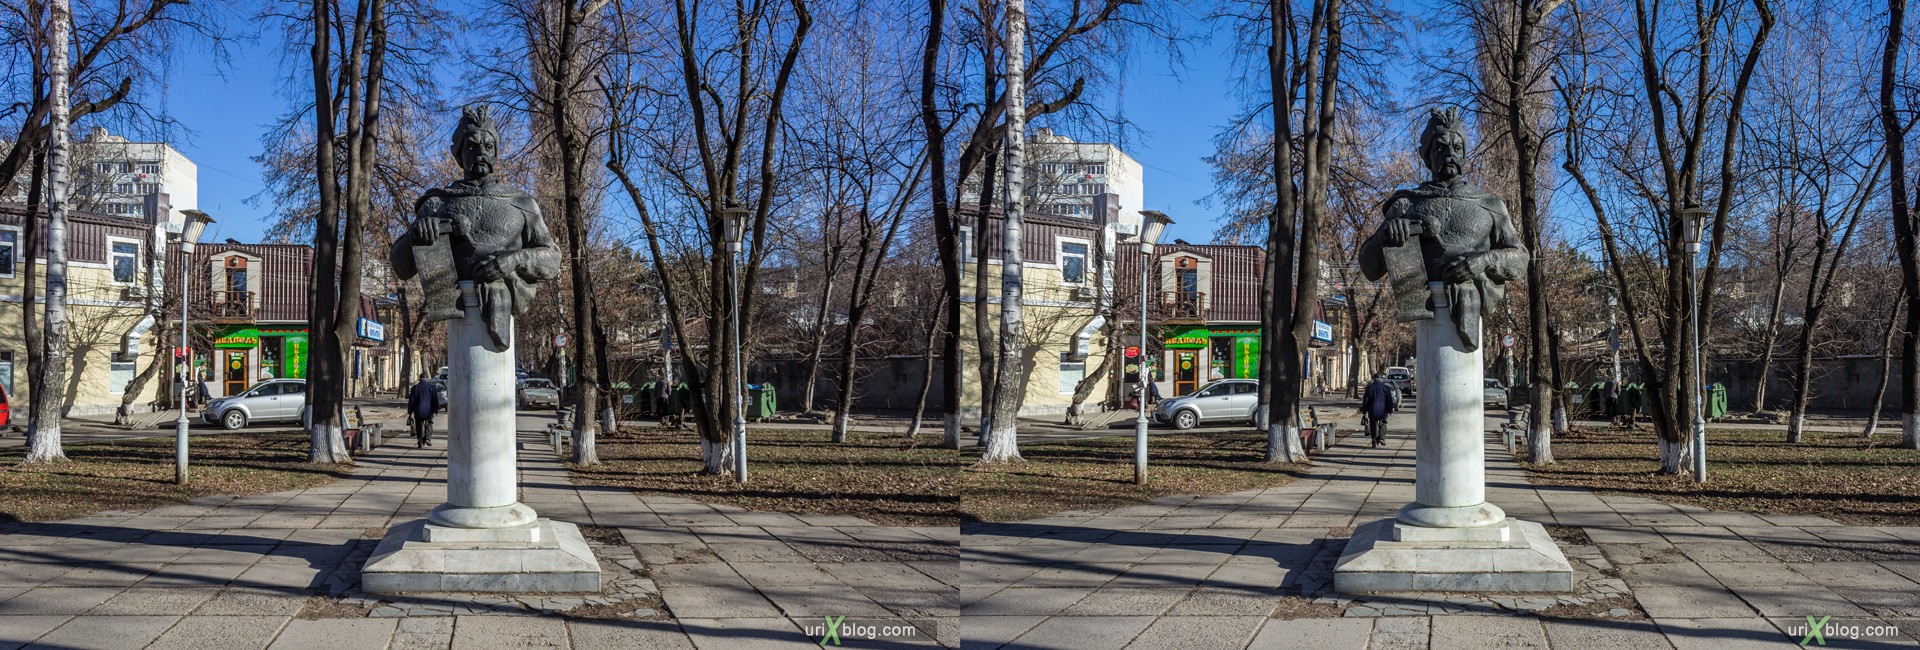 2012, Simferopol, Crimea, Russia, Ukraine, winter, 3D, stereo pair, cross-eyed, crossview, cross view stereo pair, stereoscopic